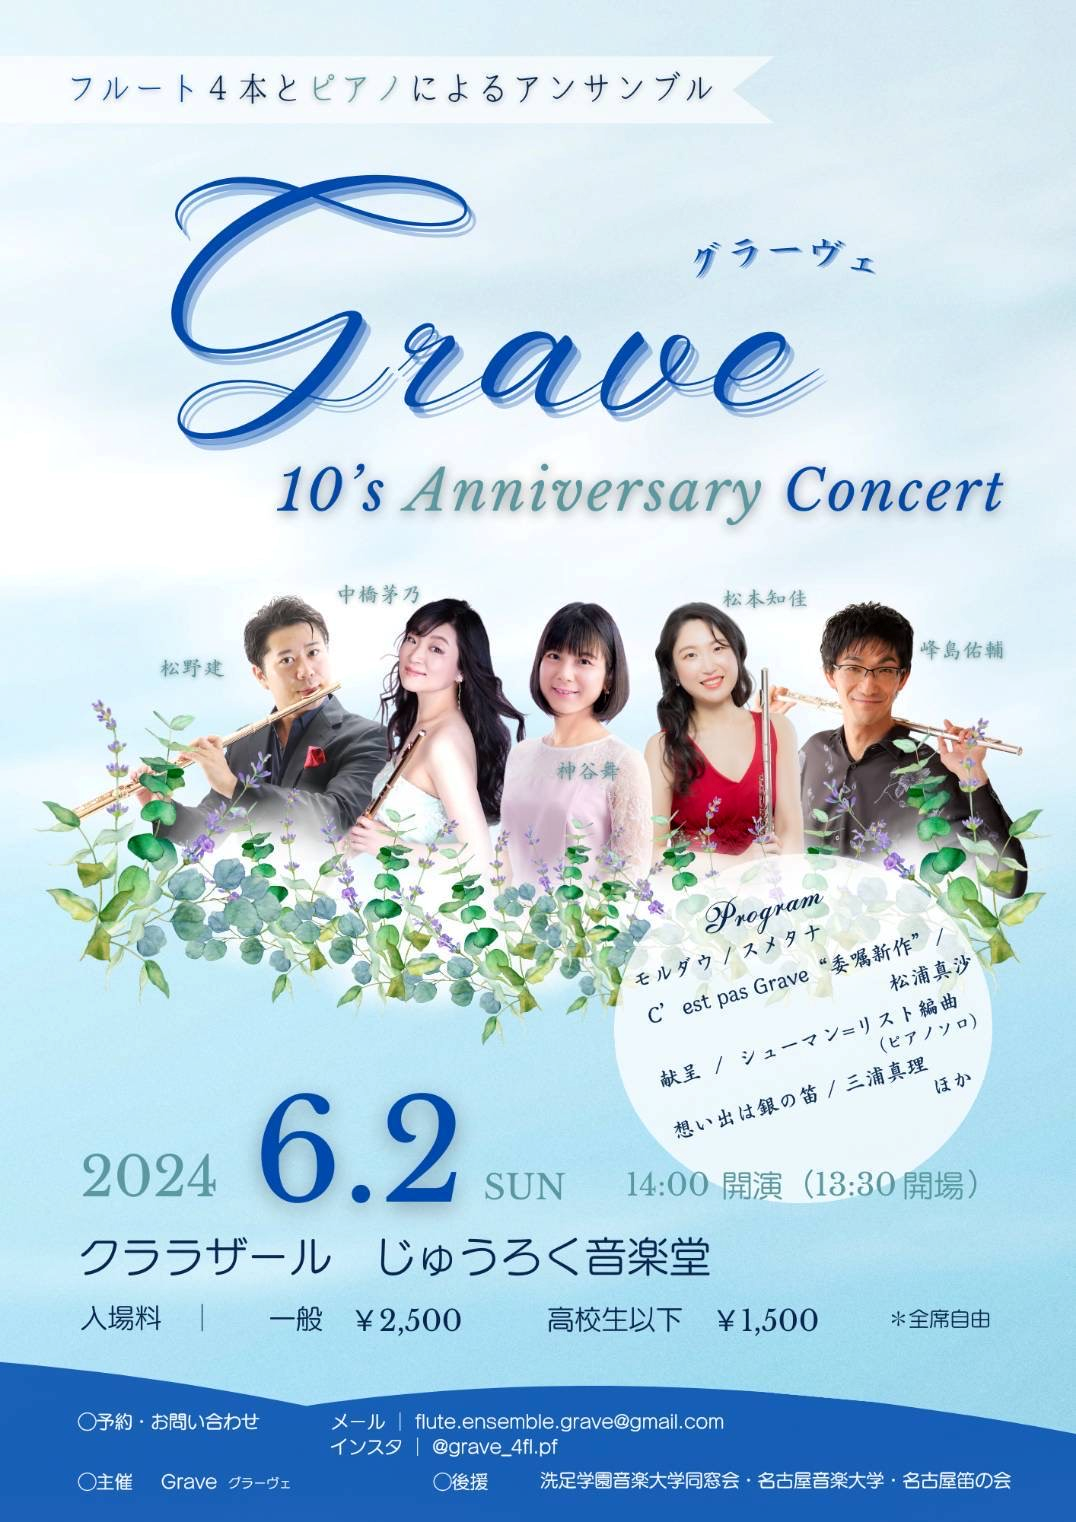 Grave　10‘s Anniversary Concert